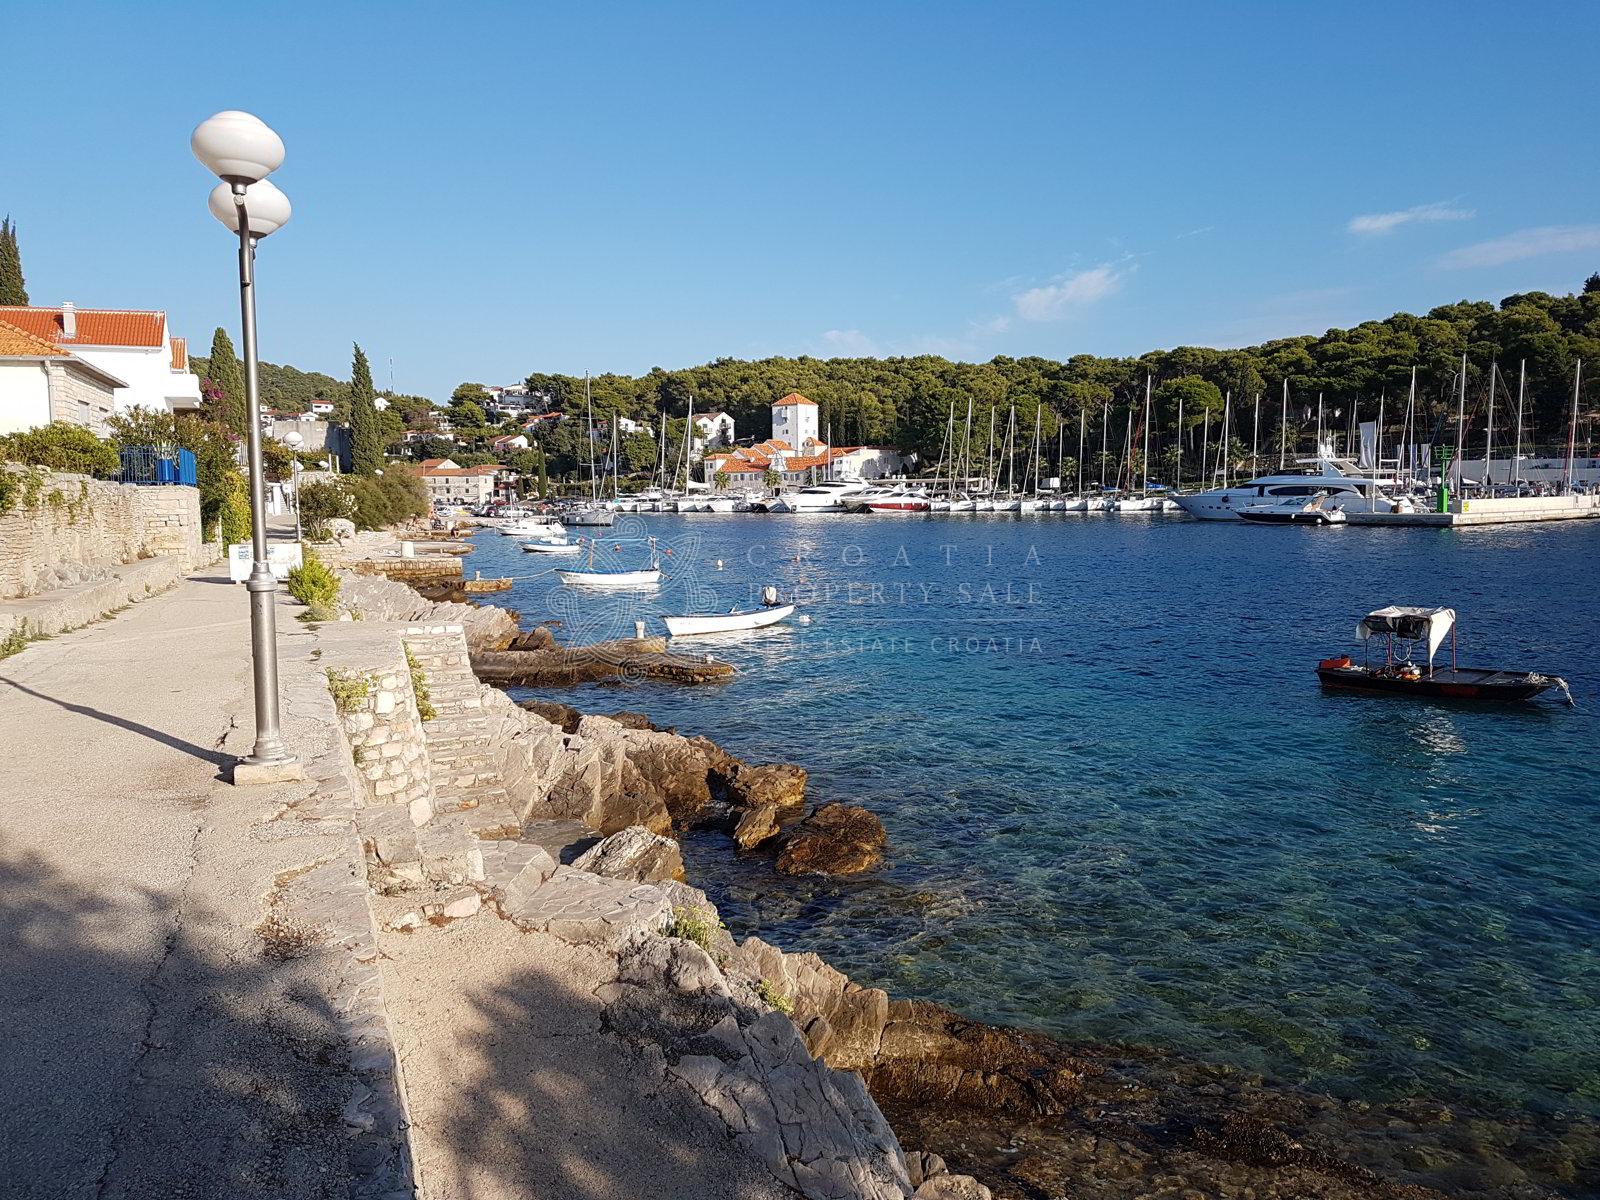 Croatia Solta island house in development for sale by the sea